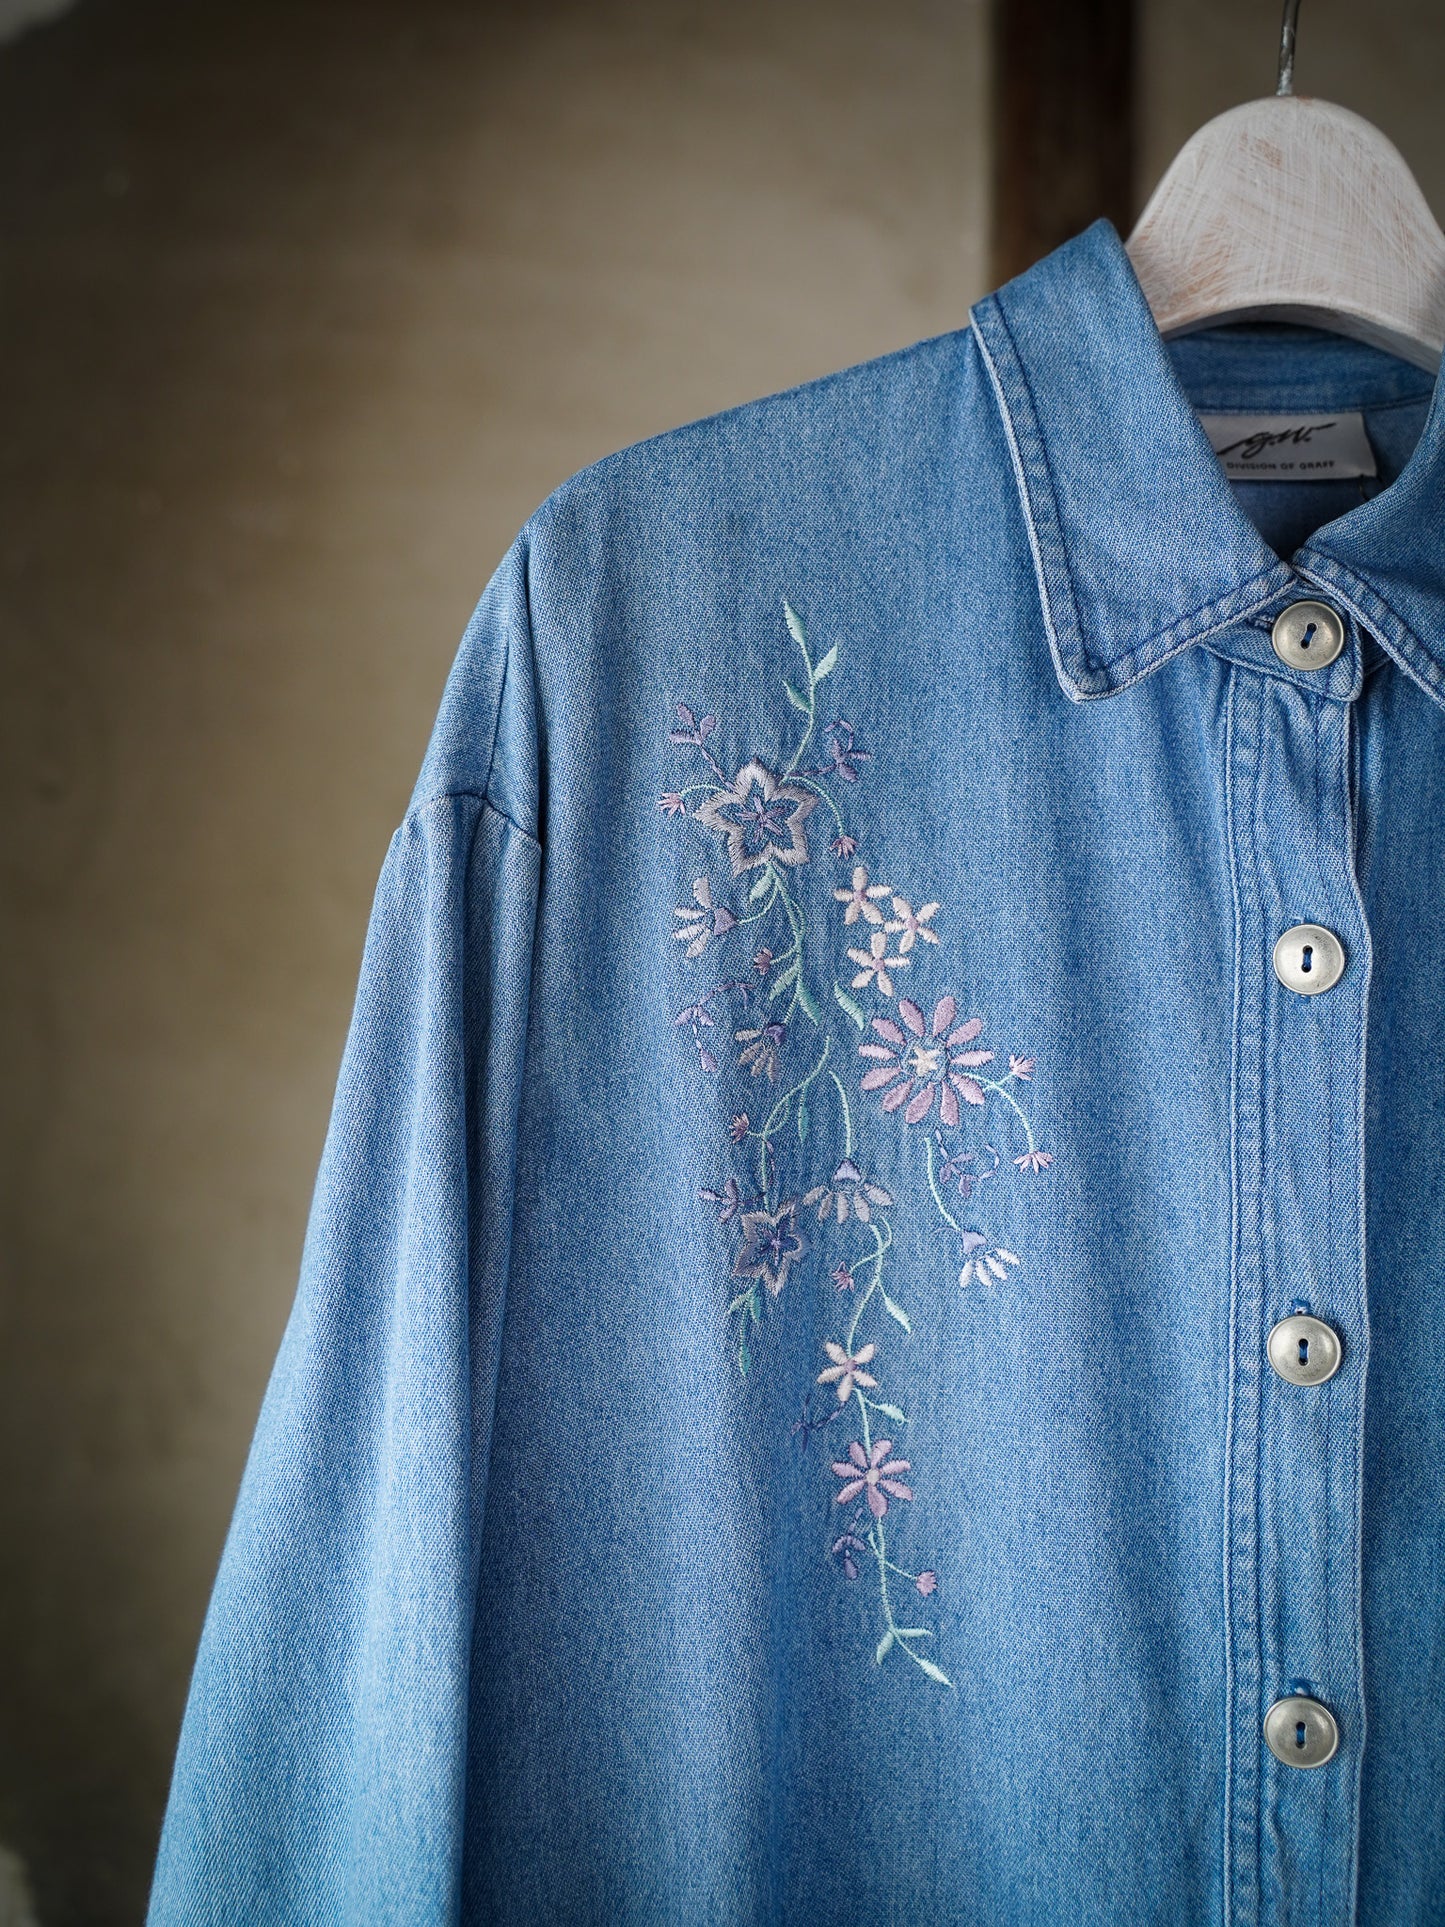 80s Vintage Flower Embroidery Denim Shirts Blouson